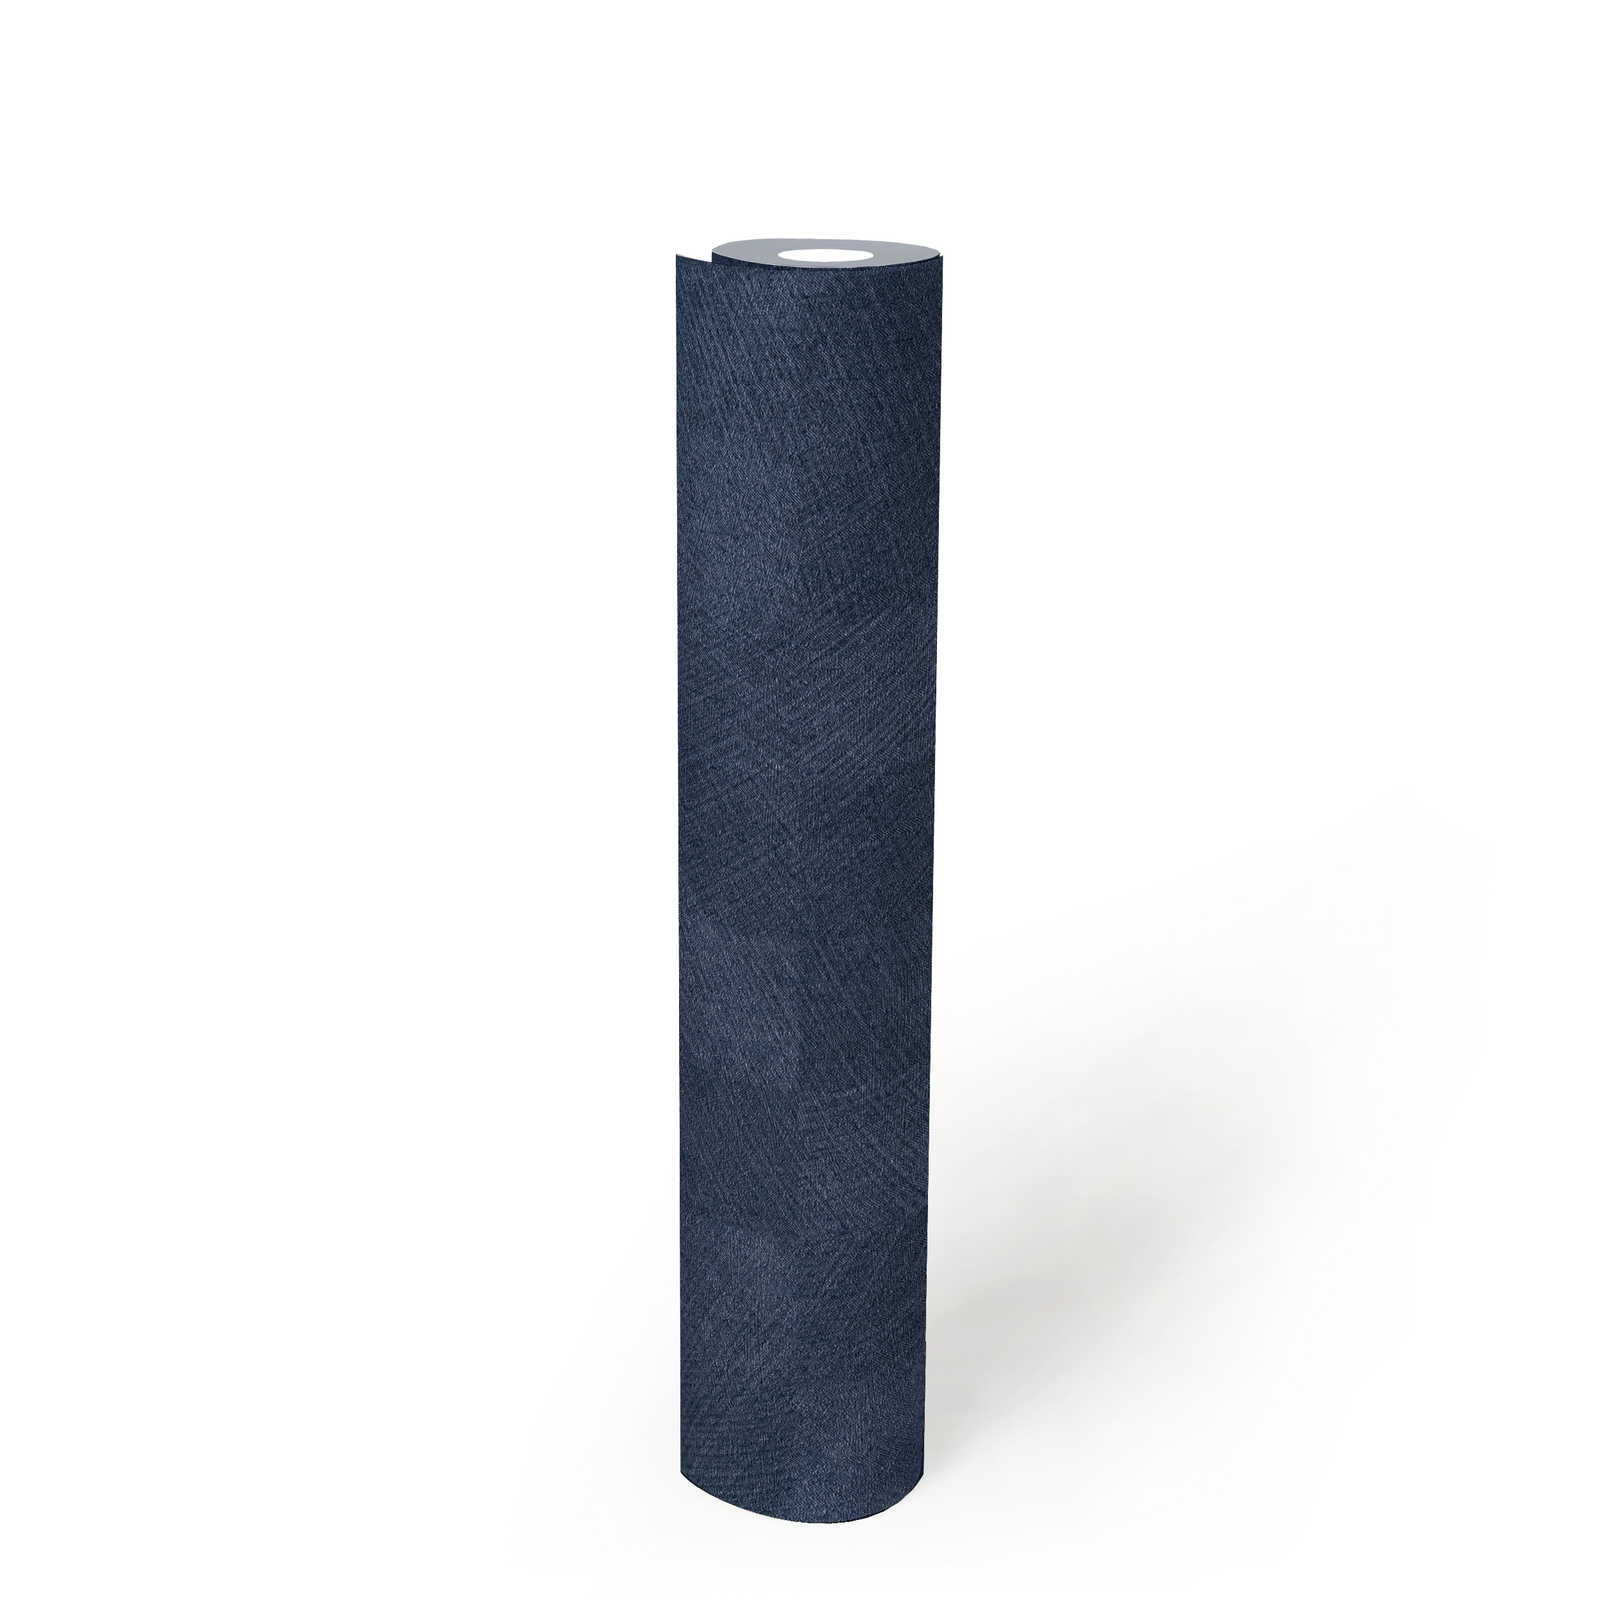             Geruit behang nachtblauw met structuur & glanseffect - blauw
        